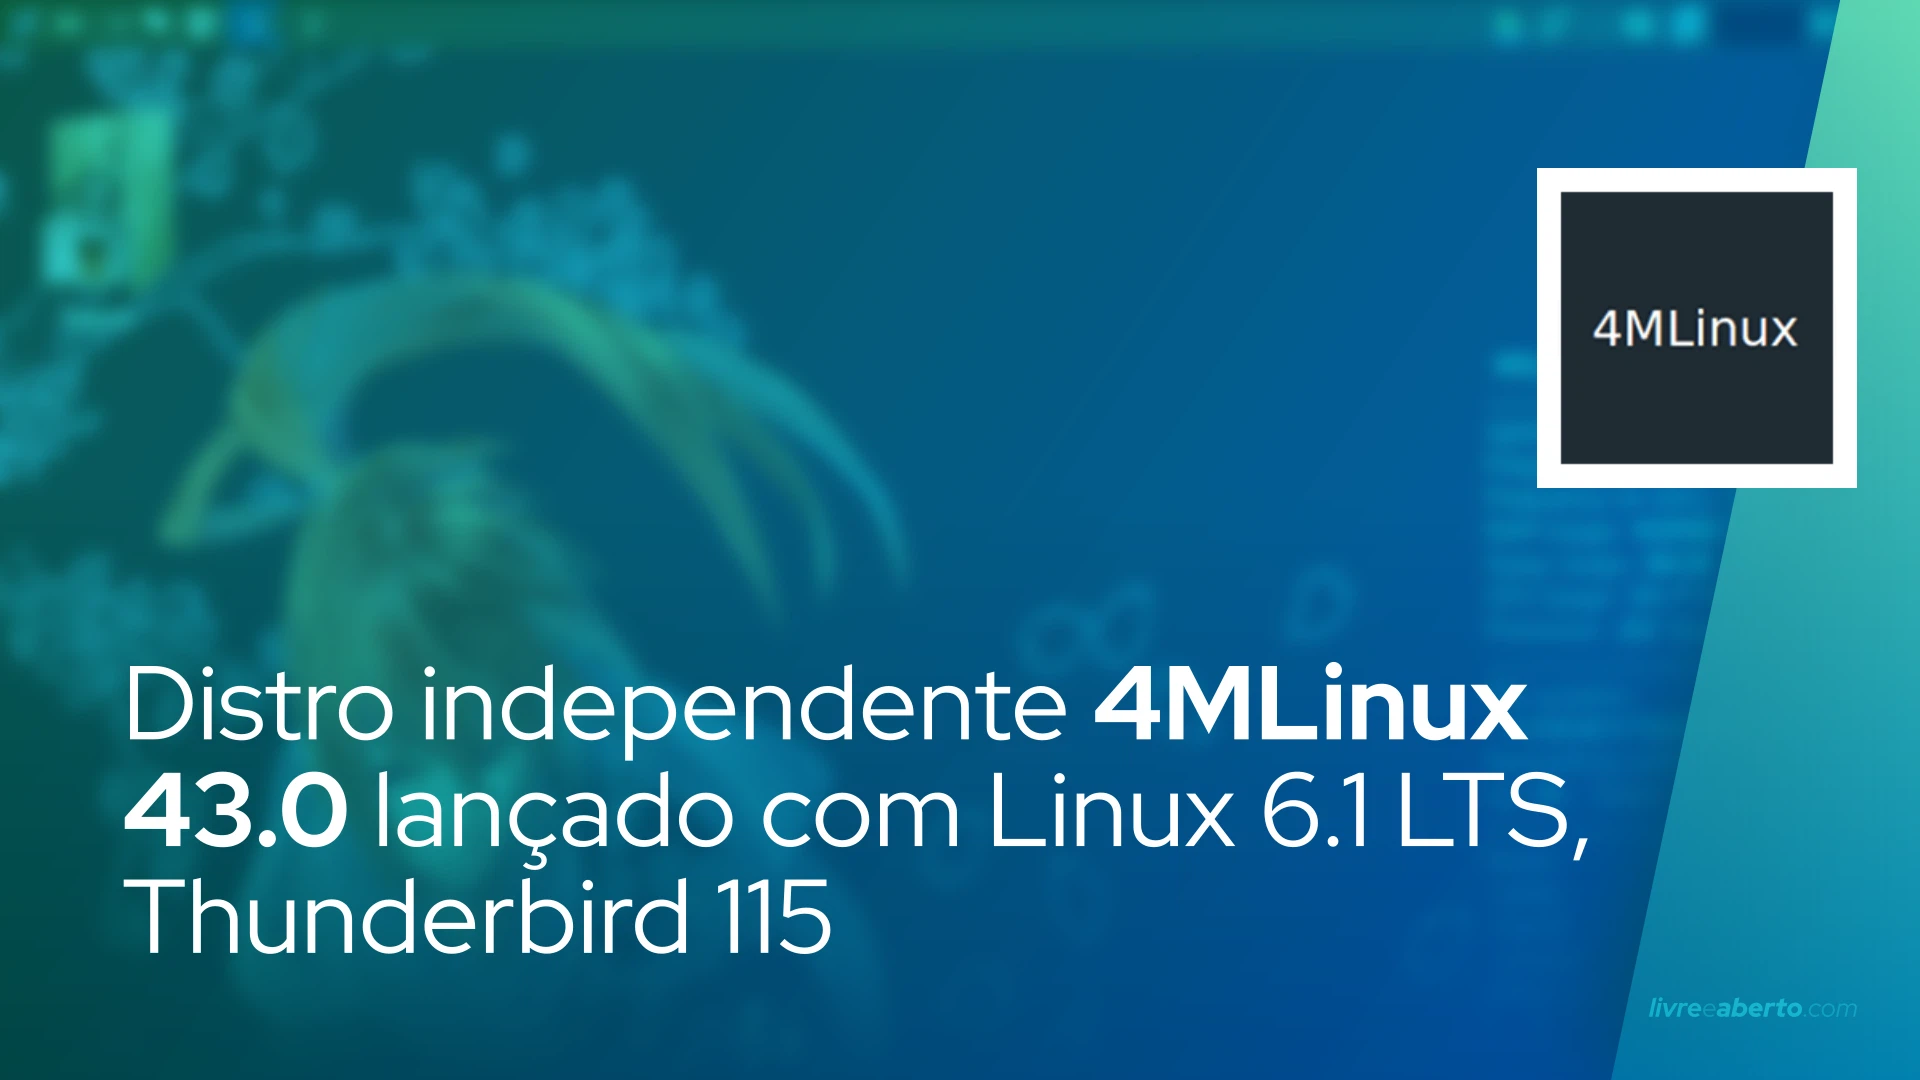 Distro independente 4MLinux 43.0 lançado com Linux 6.1 LTS, Thunderbird 115